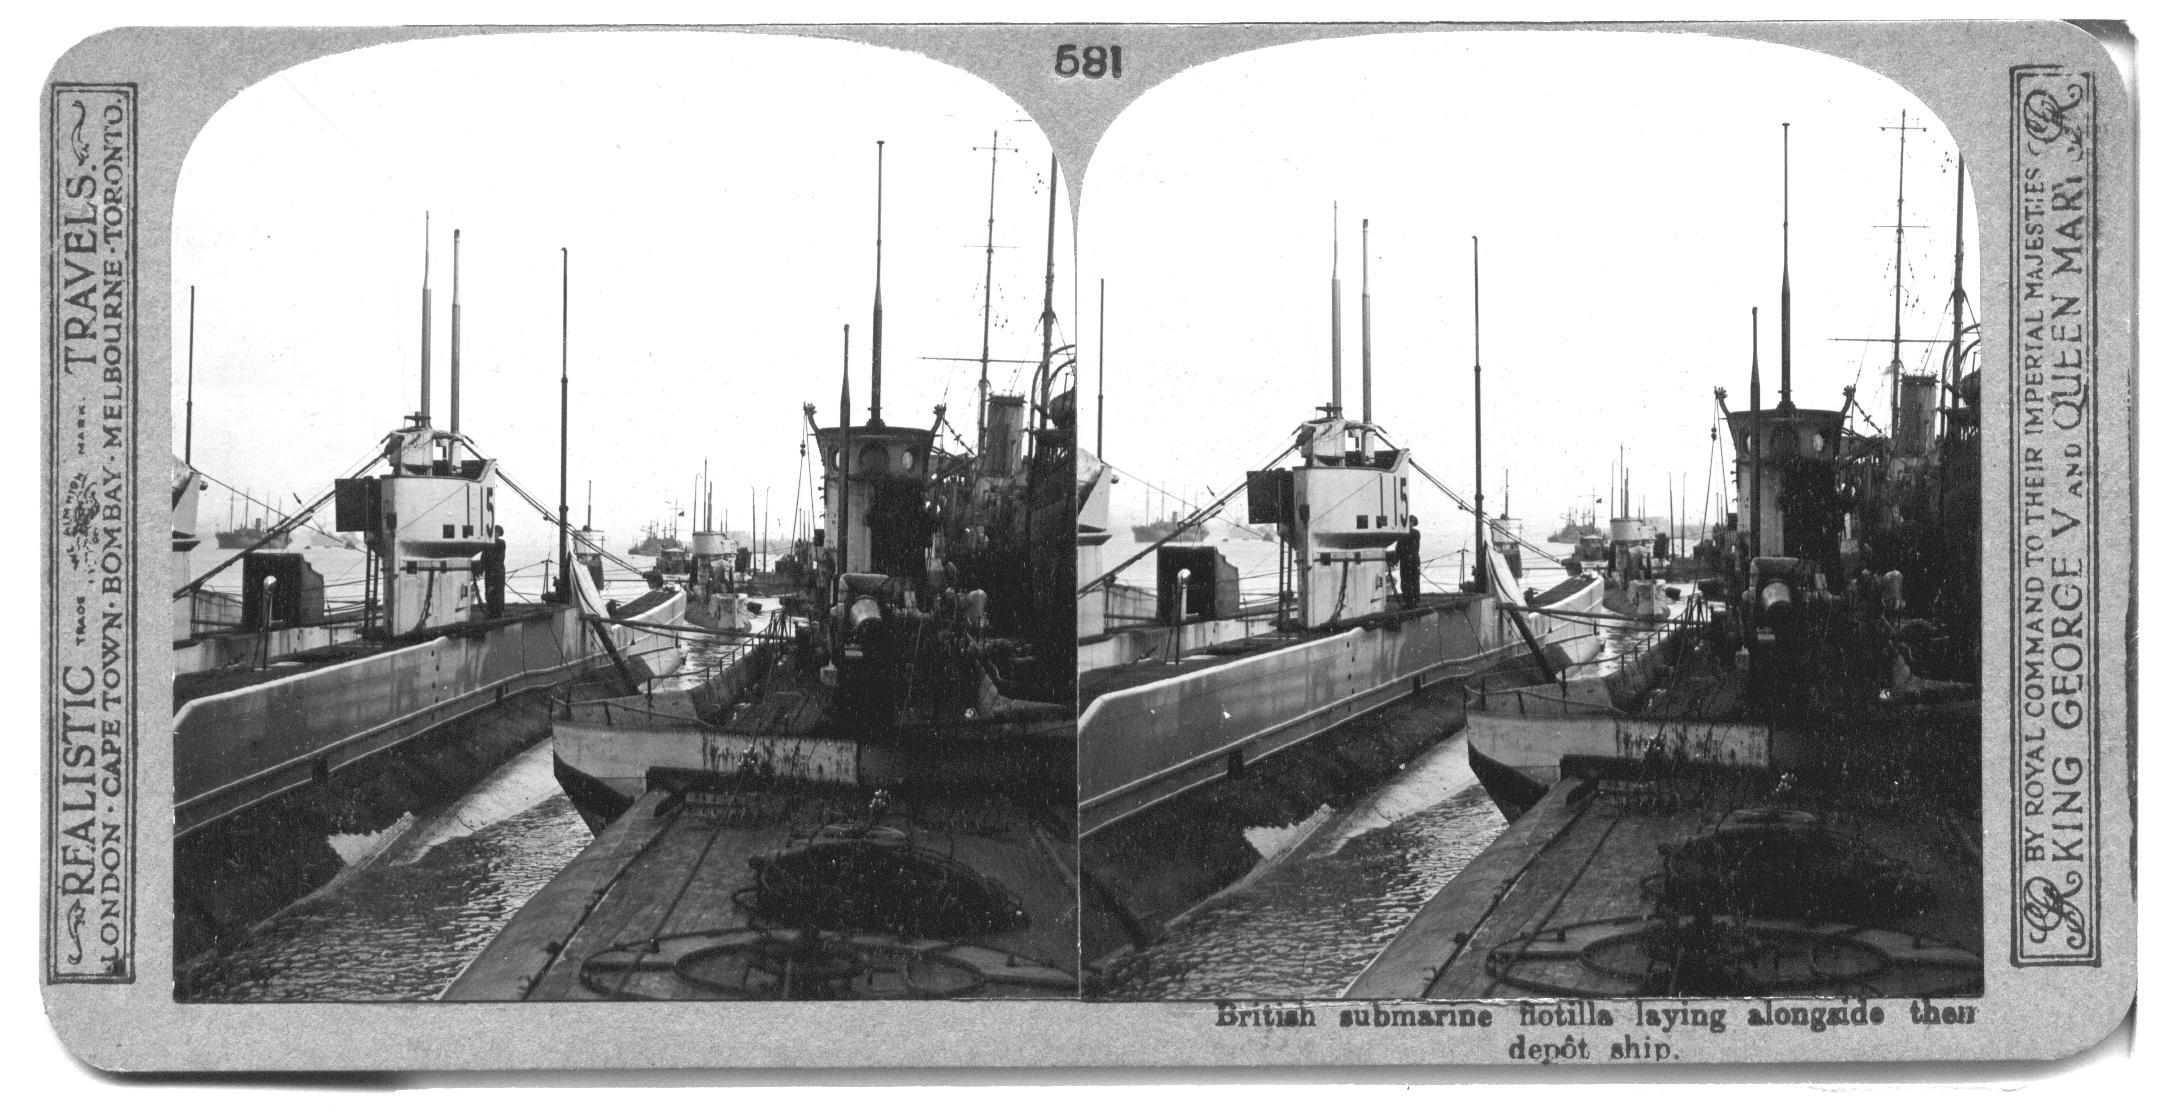 British submarine flotilla laying alongside their depôt ship